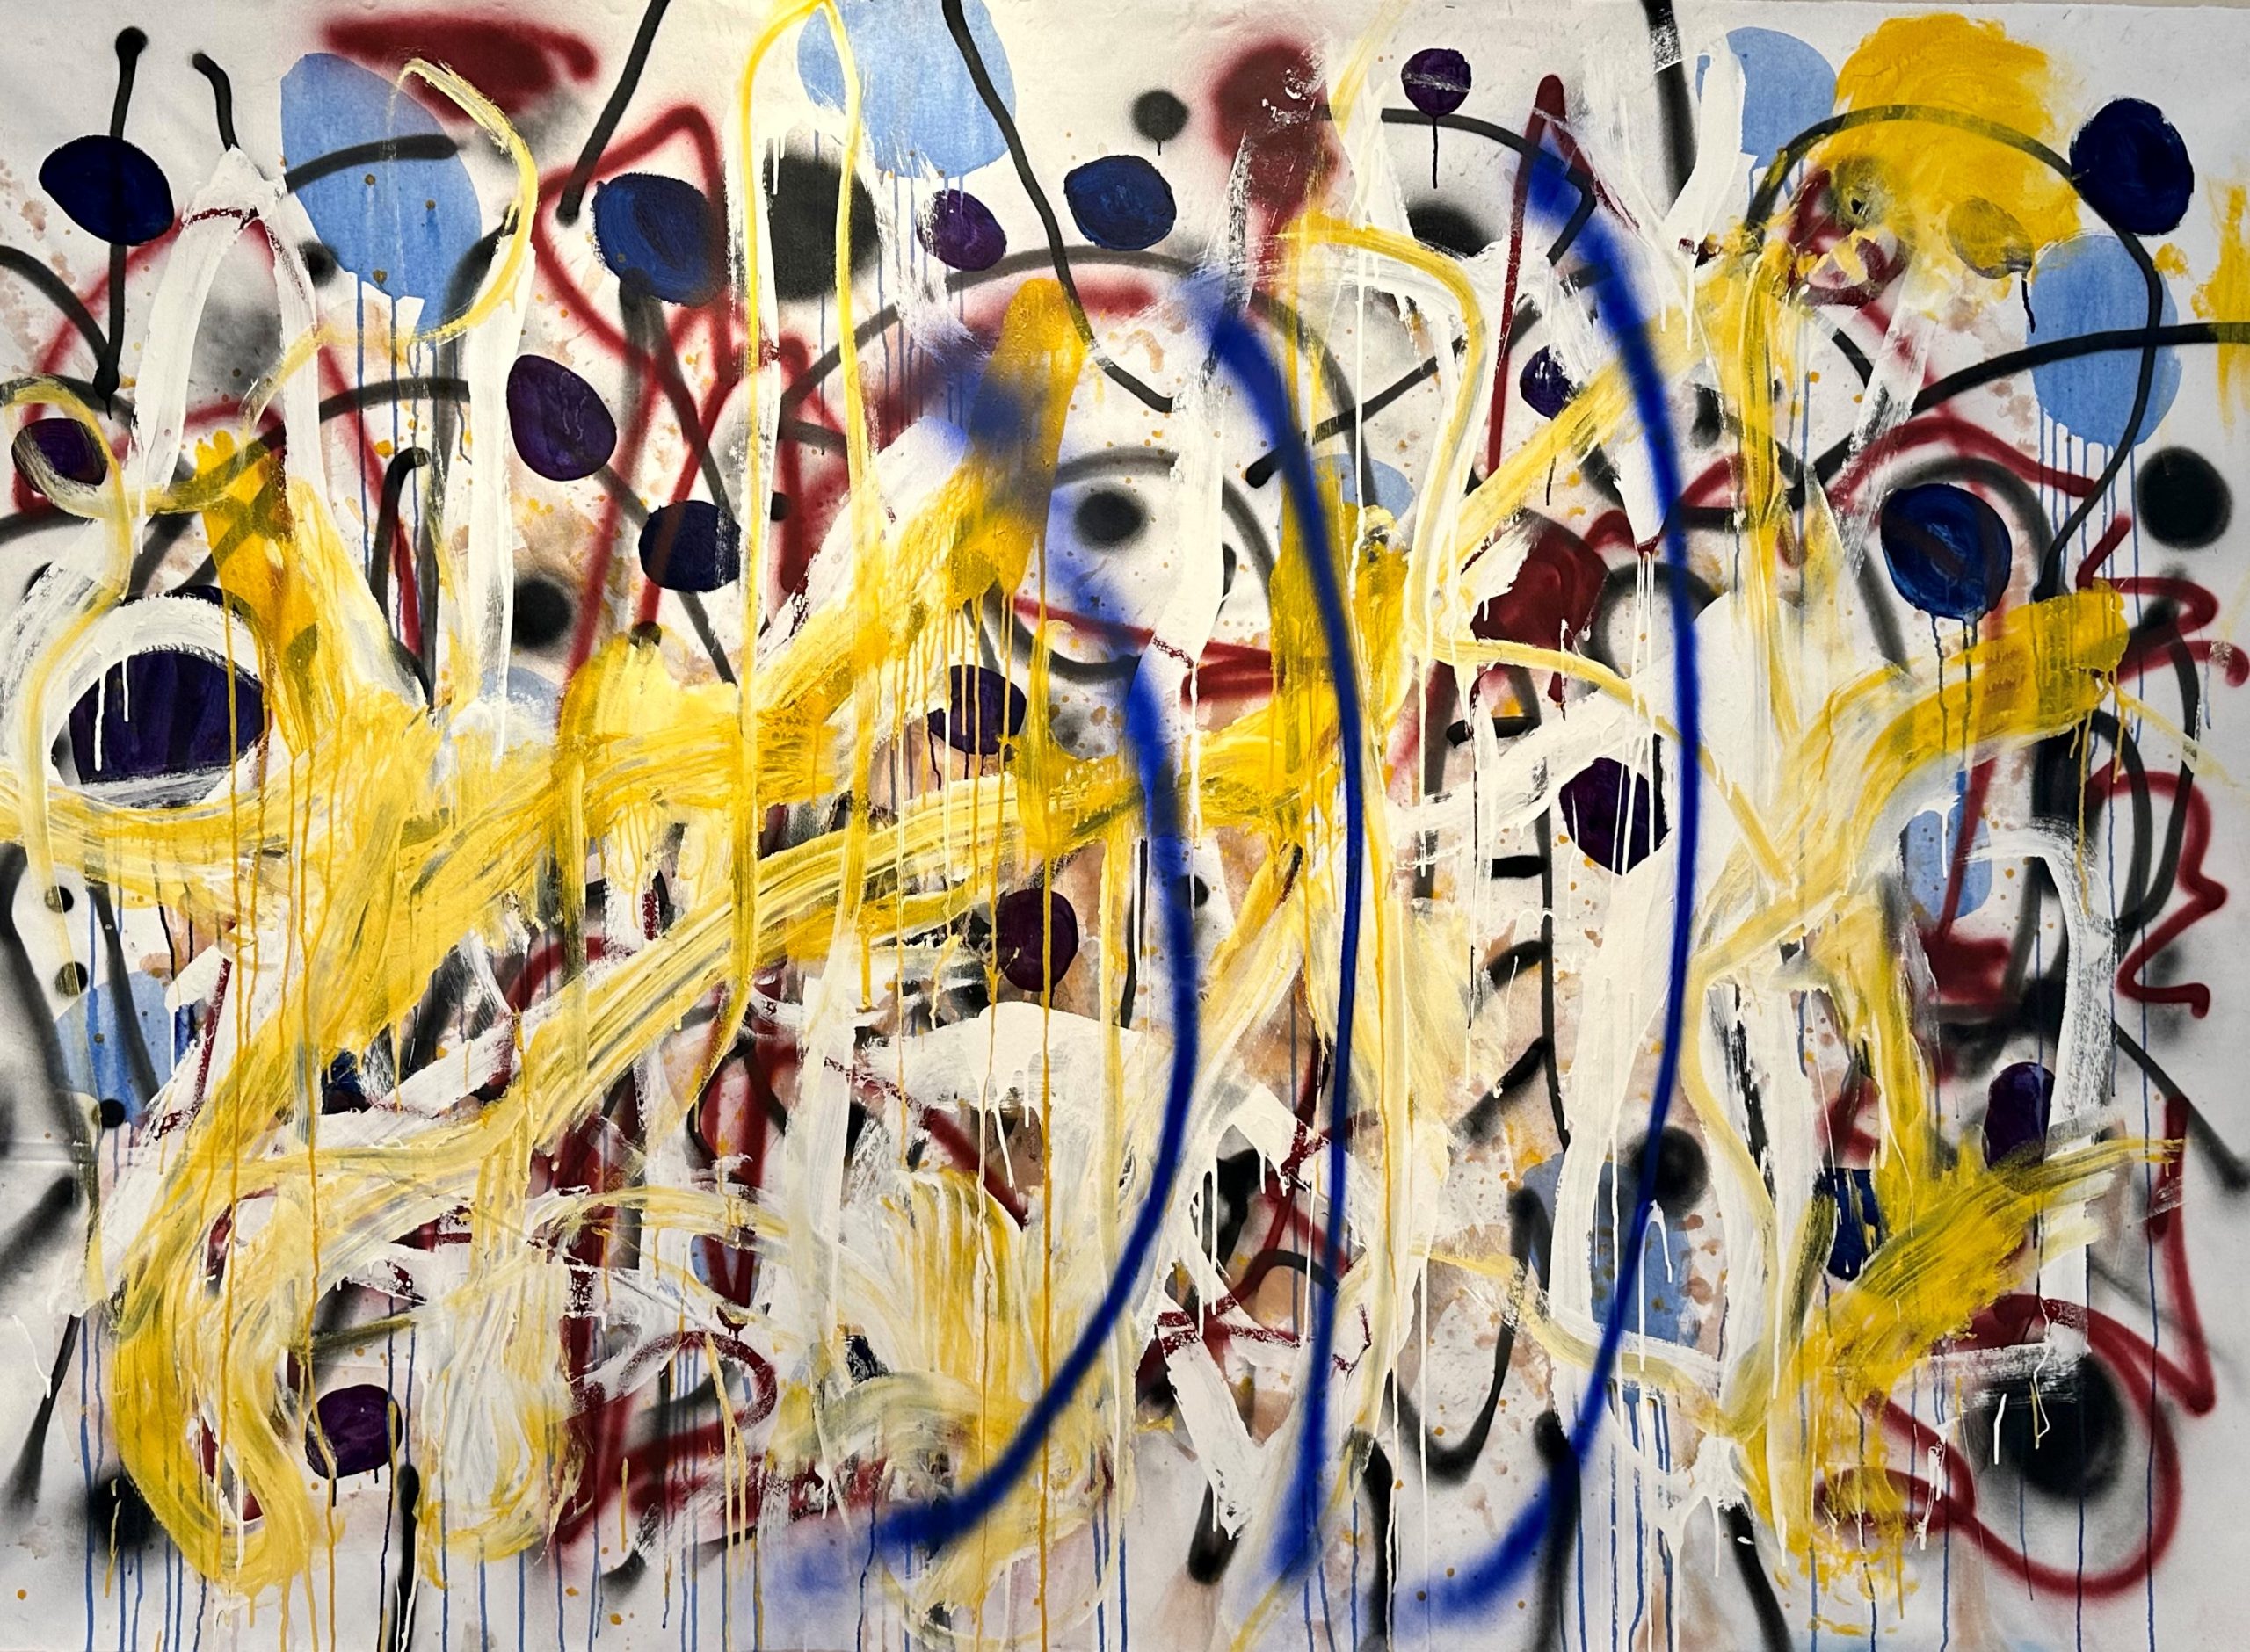 Al Poulet 'The Point' acrylic and spray paint on canvas 150 x 240cm $16,000